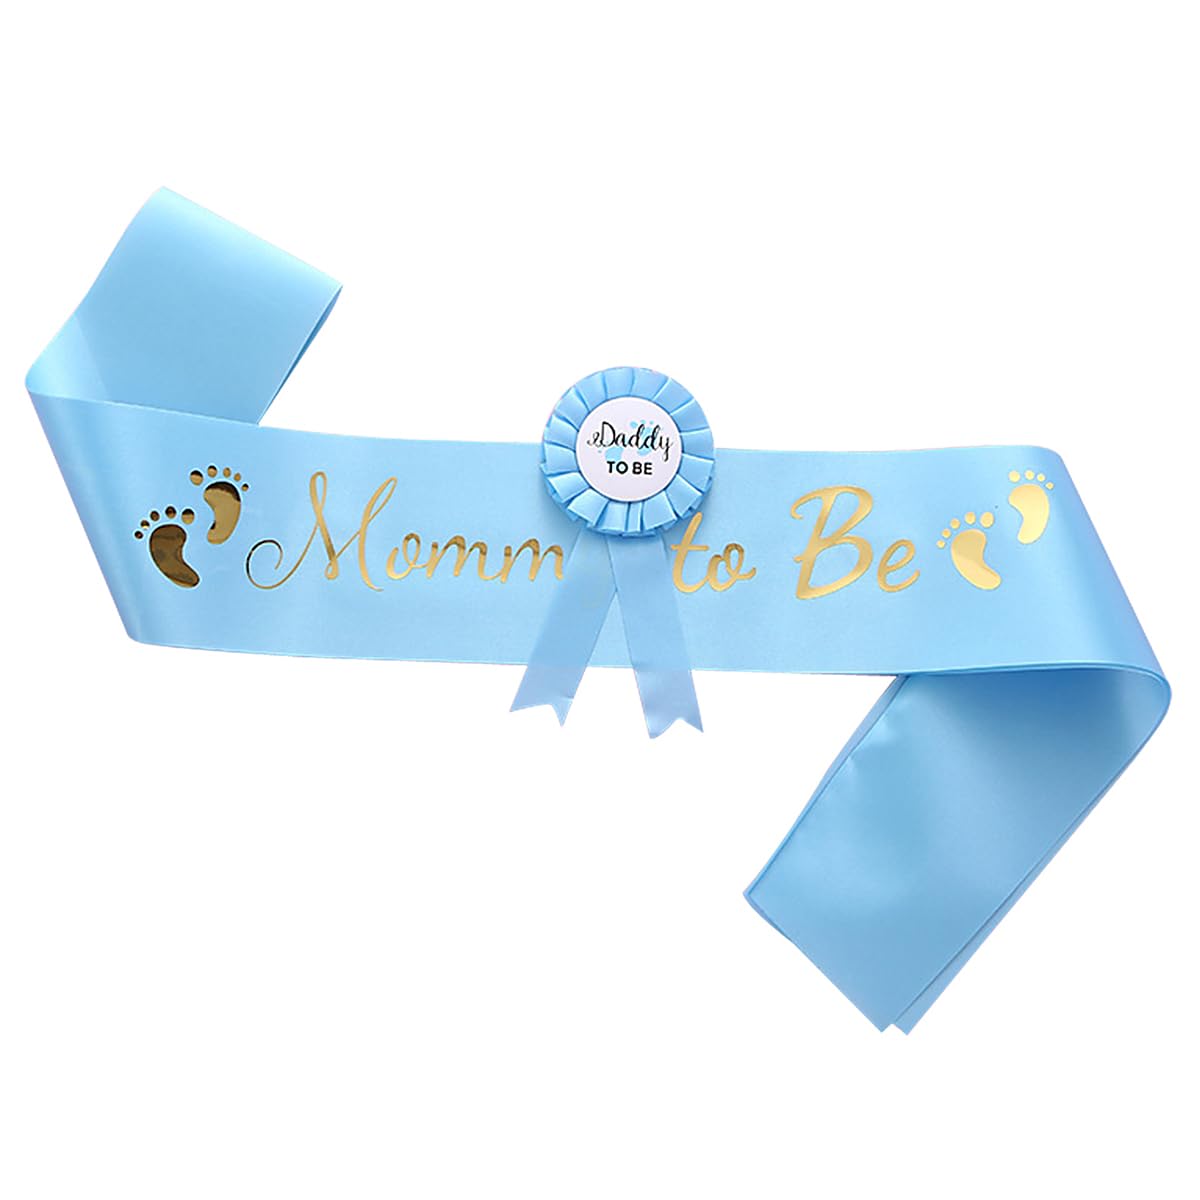 HUKONHEP 2 Packs Blue Baby Shower Sash, Mommy to Be Sash and Daddy to Be Badge, Baby Shower Decorations for Boys, Gender Reveals Gift